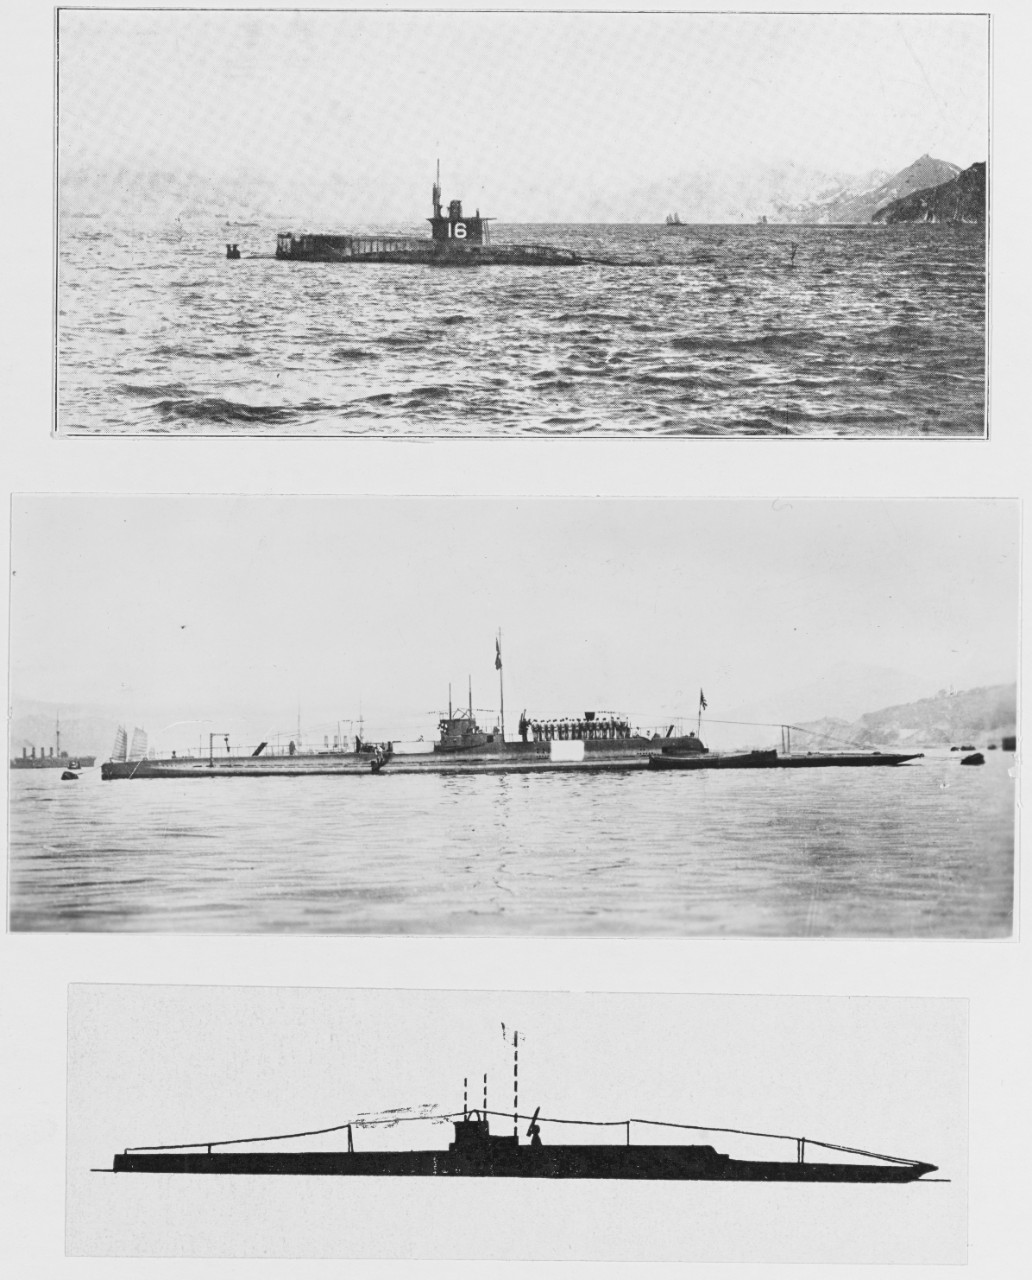 Japanese Submarine No. 16